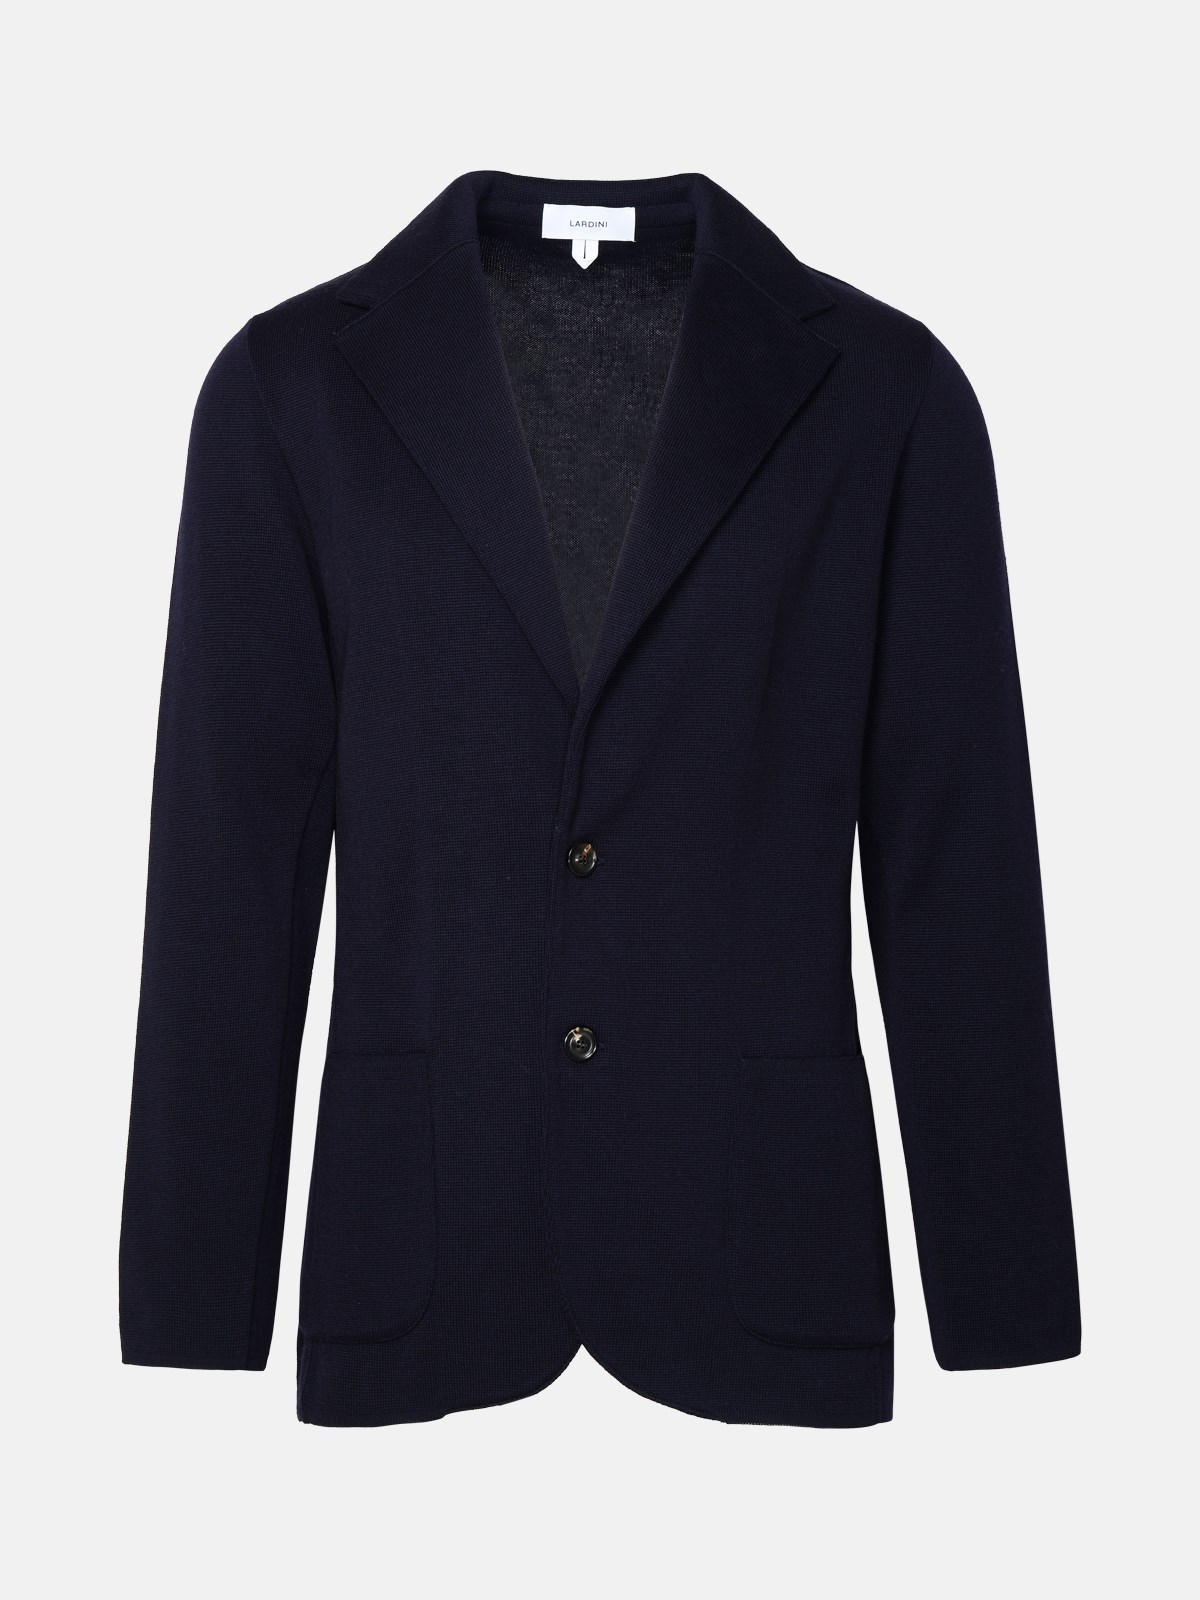 Lardini Blue Wool Blazer Jacket